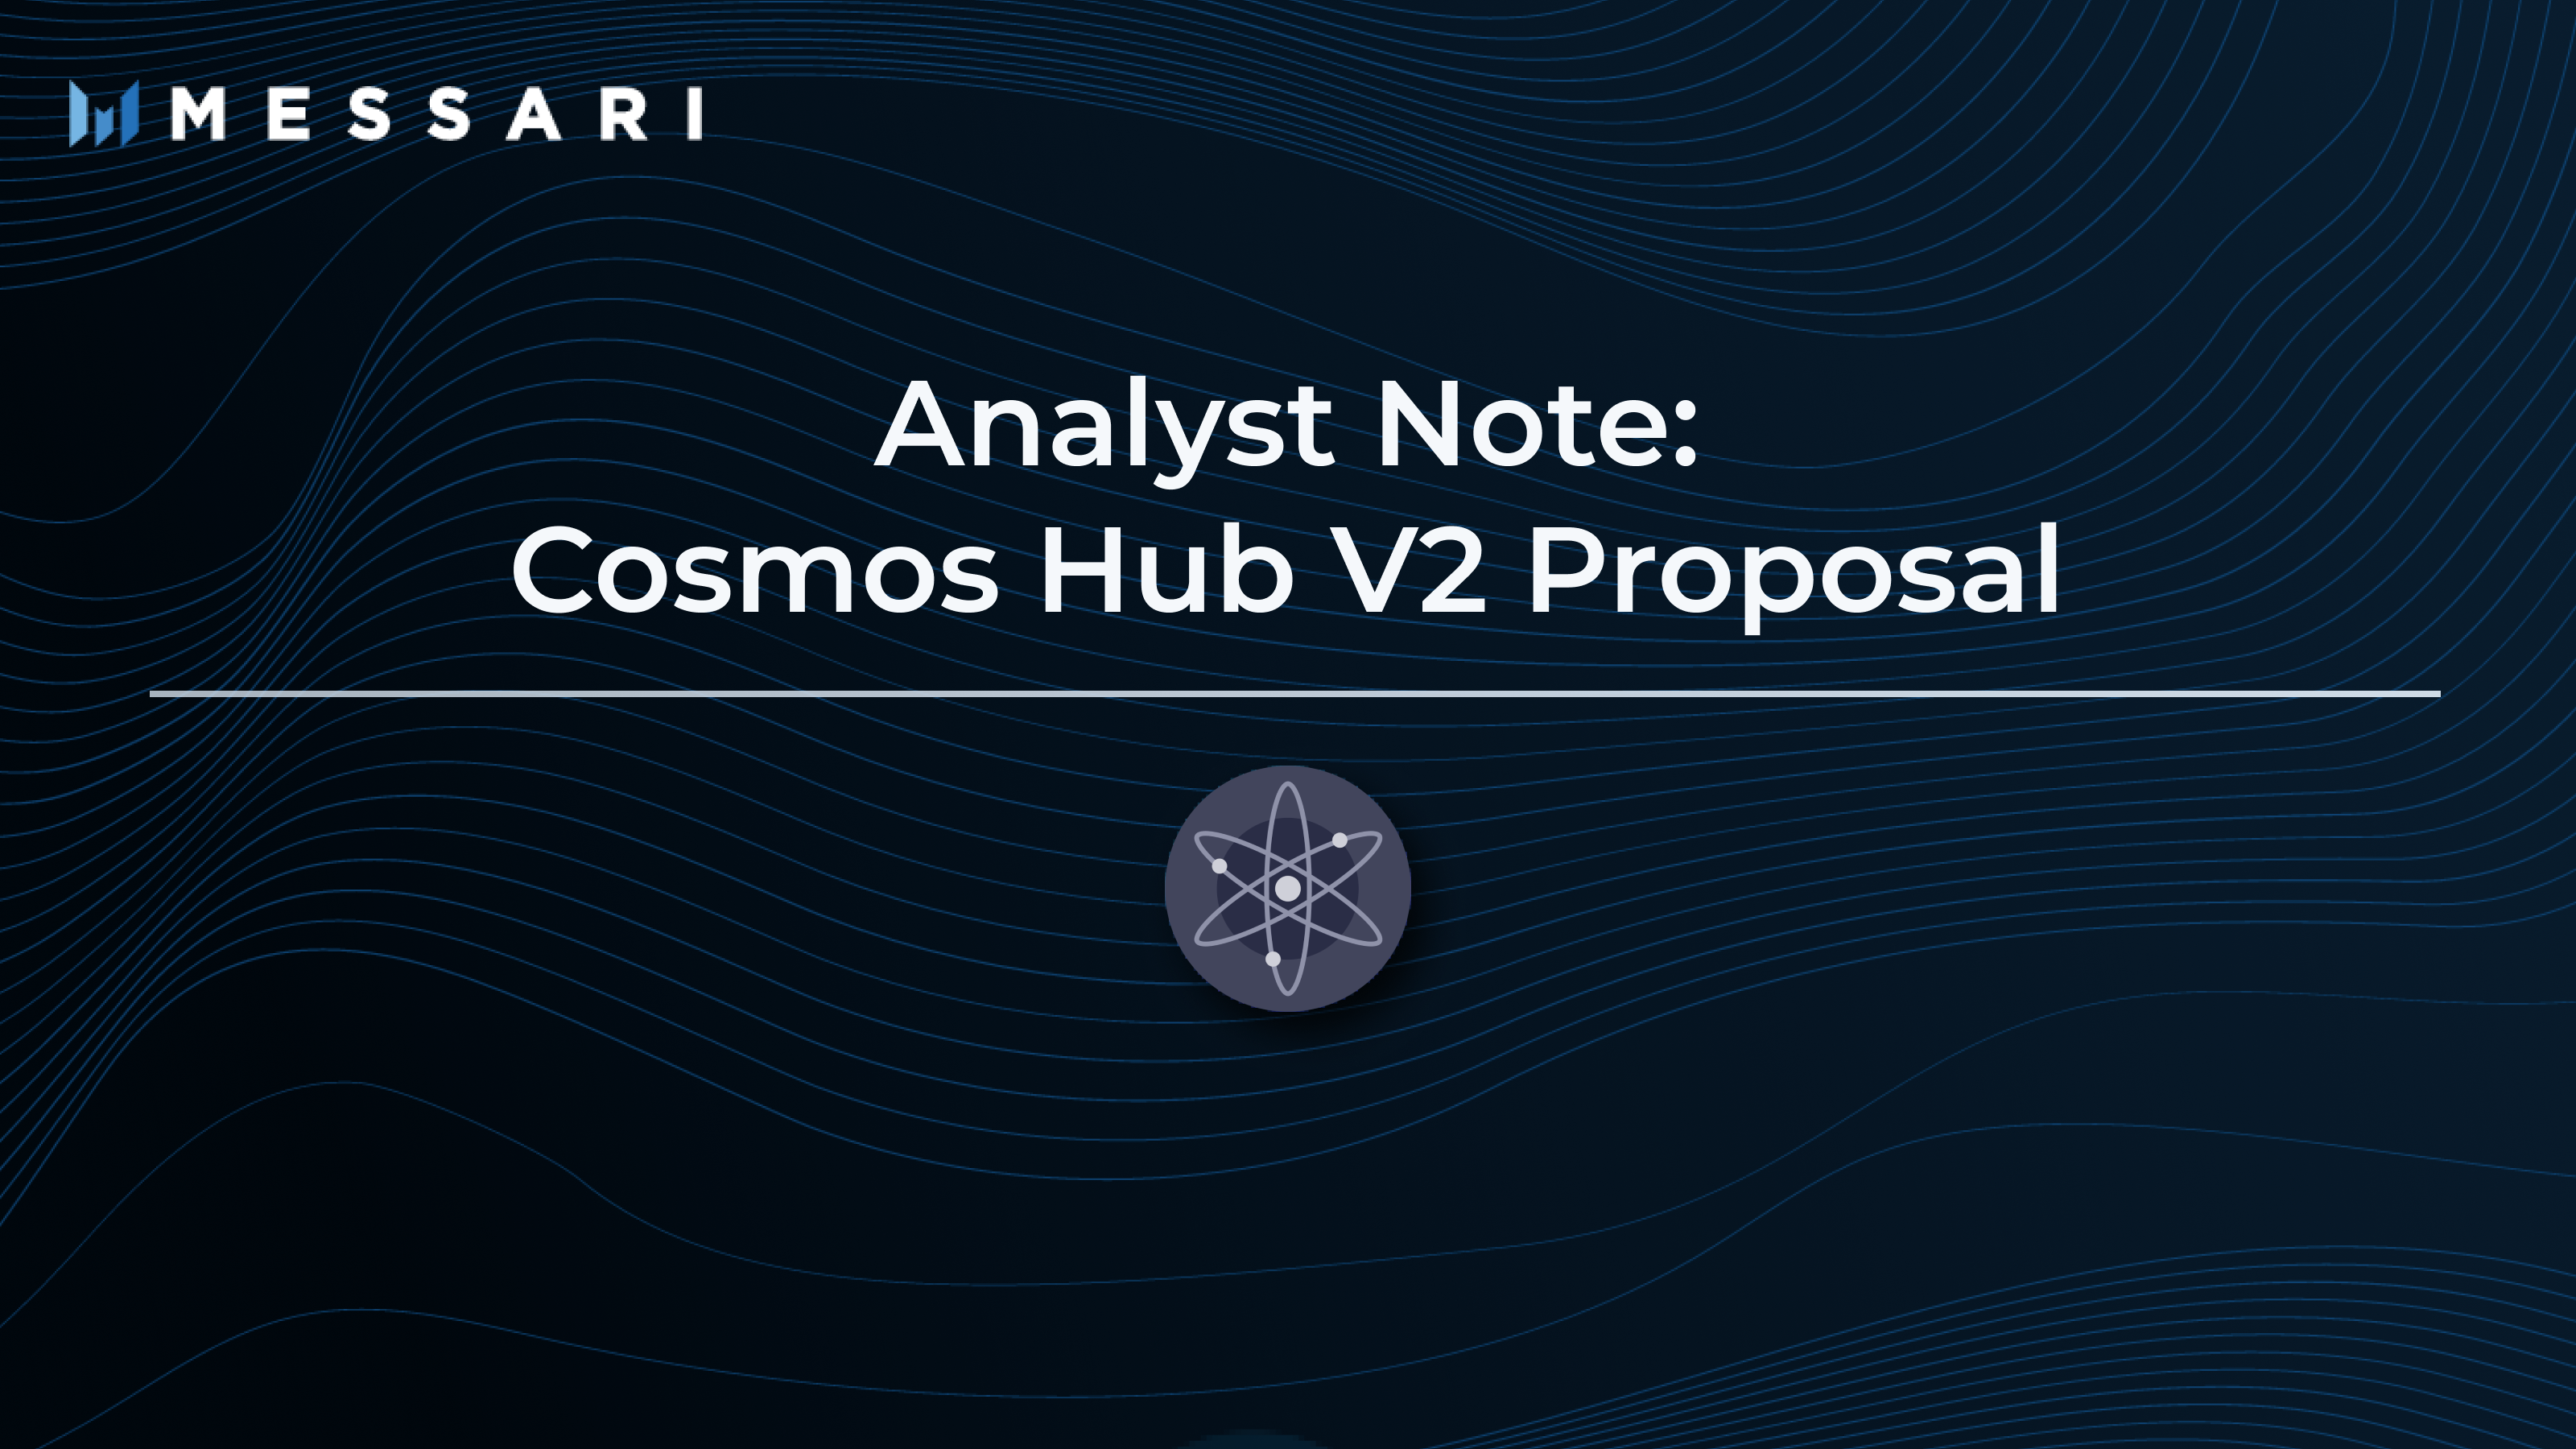 Analyst Note: Cosmos Hub V2 Proposal